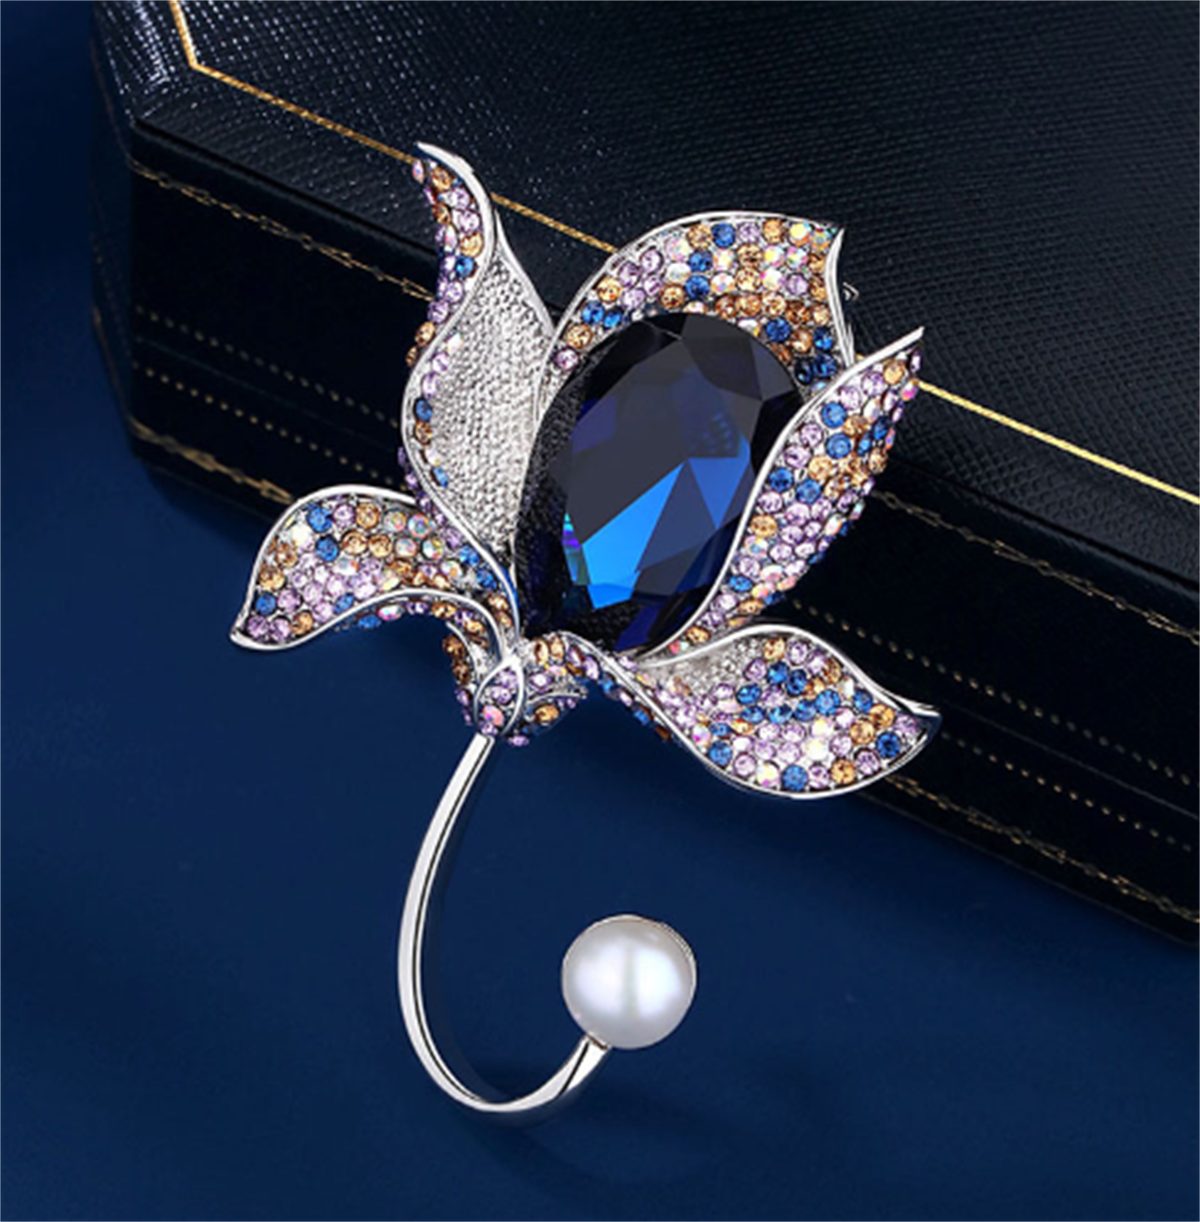 Brosche mit Vintage-Brosche selected Silber Kristall-Blumen-Orchideen-Perlen-Zirkon carefully